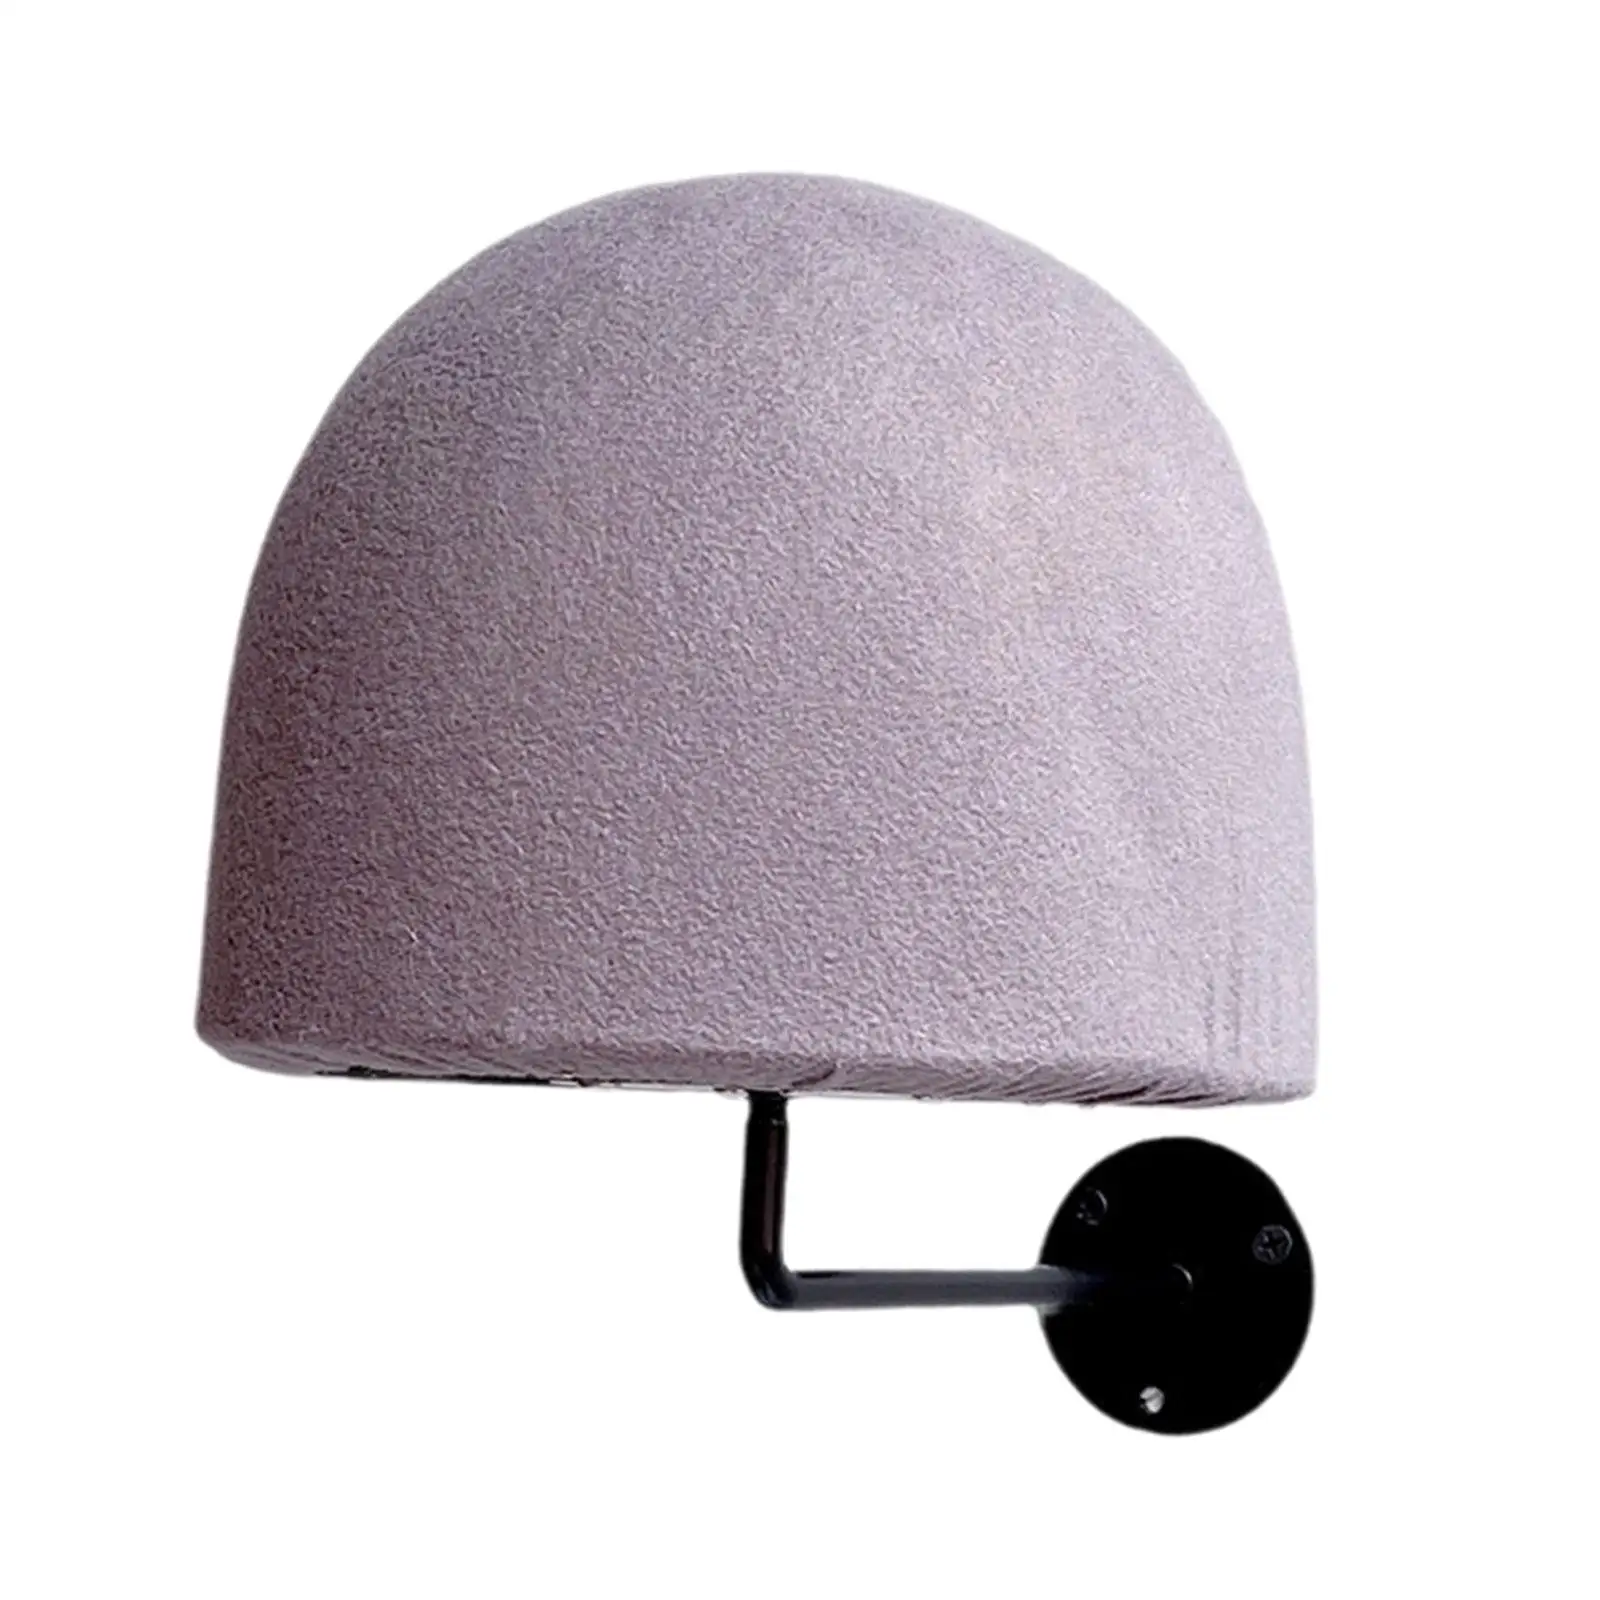 Hat Display Holder Cap Organizer Portable Multipurpose Hat Bracket for Stylist Beginner Styling Drying Salon Home Use Decoration